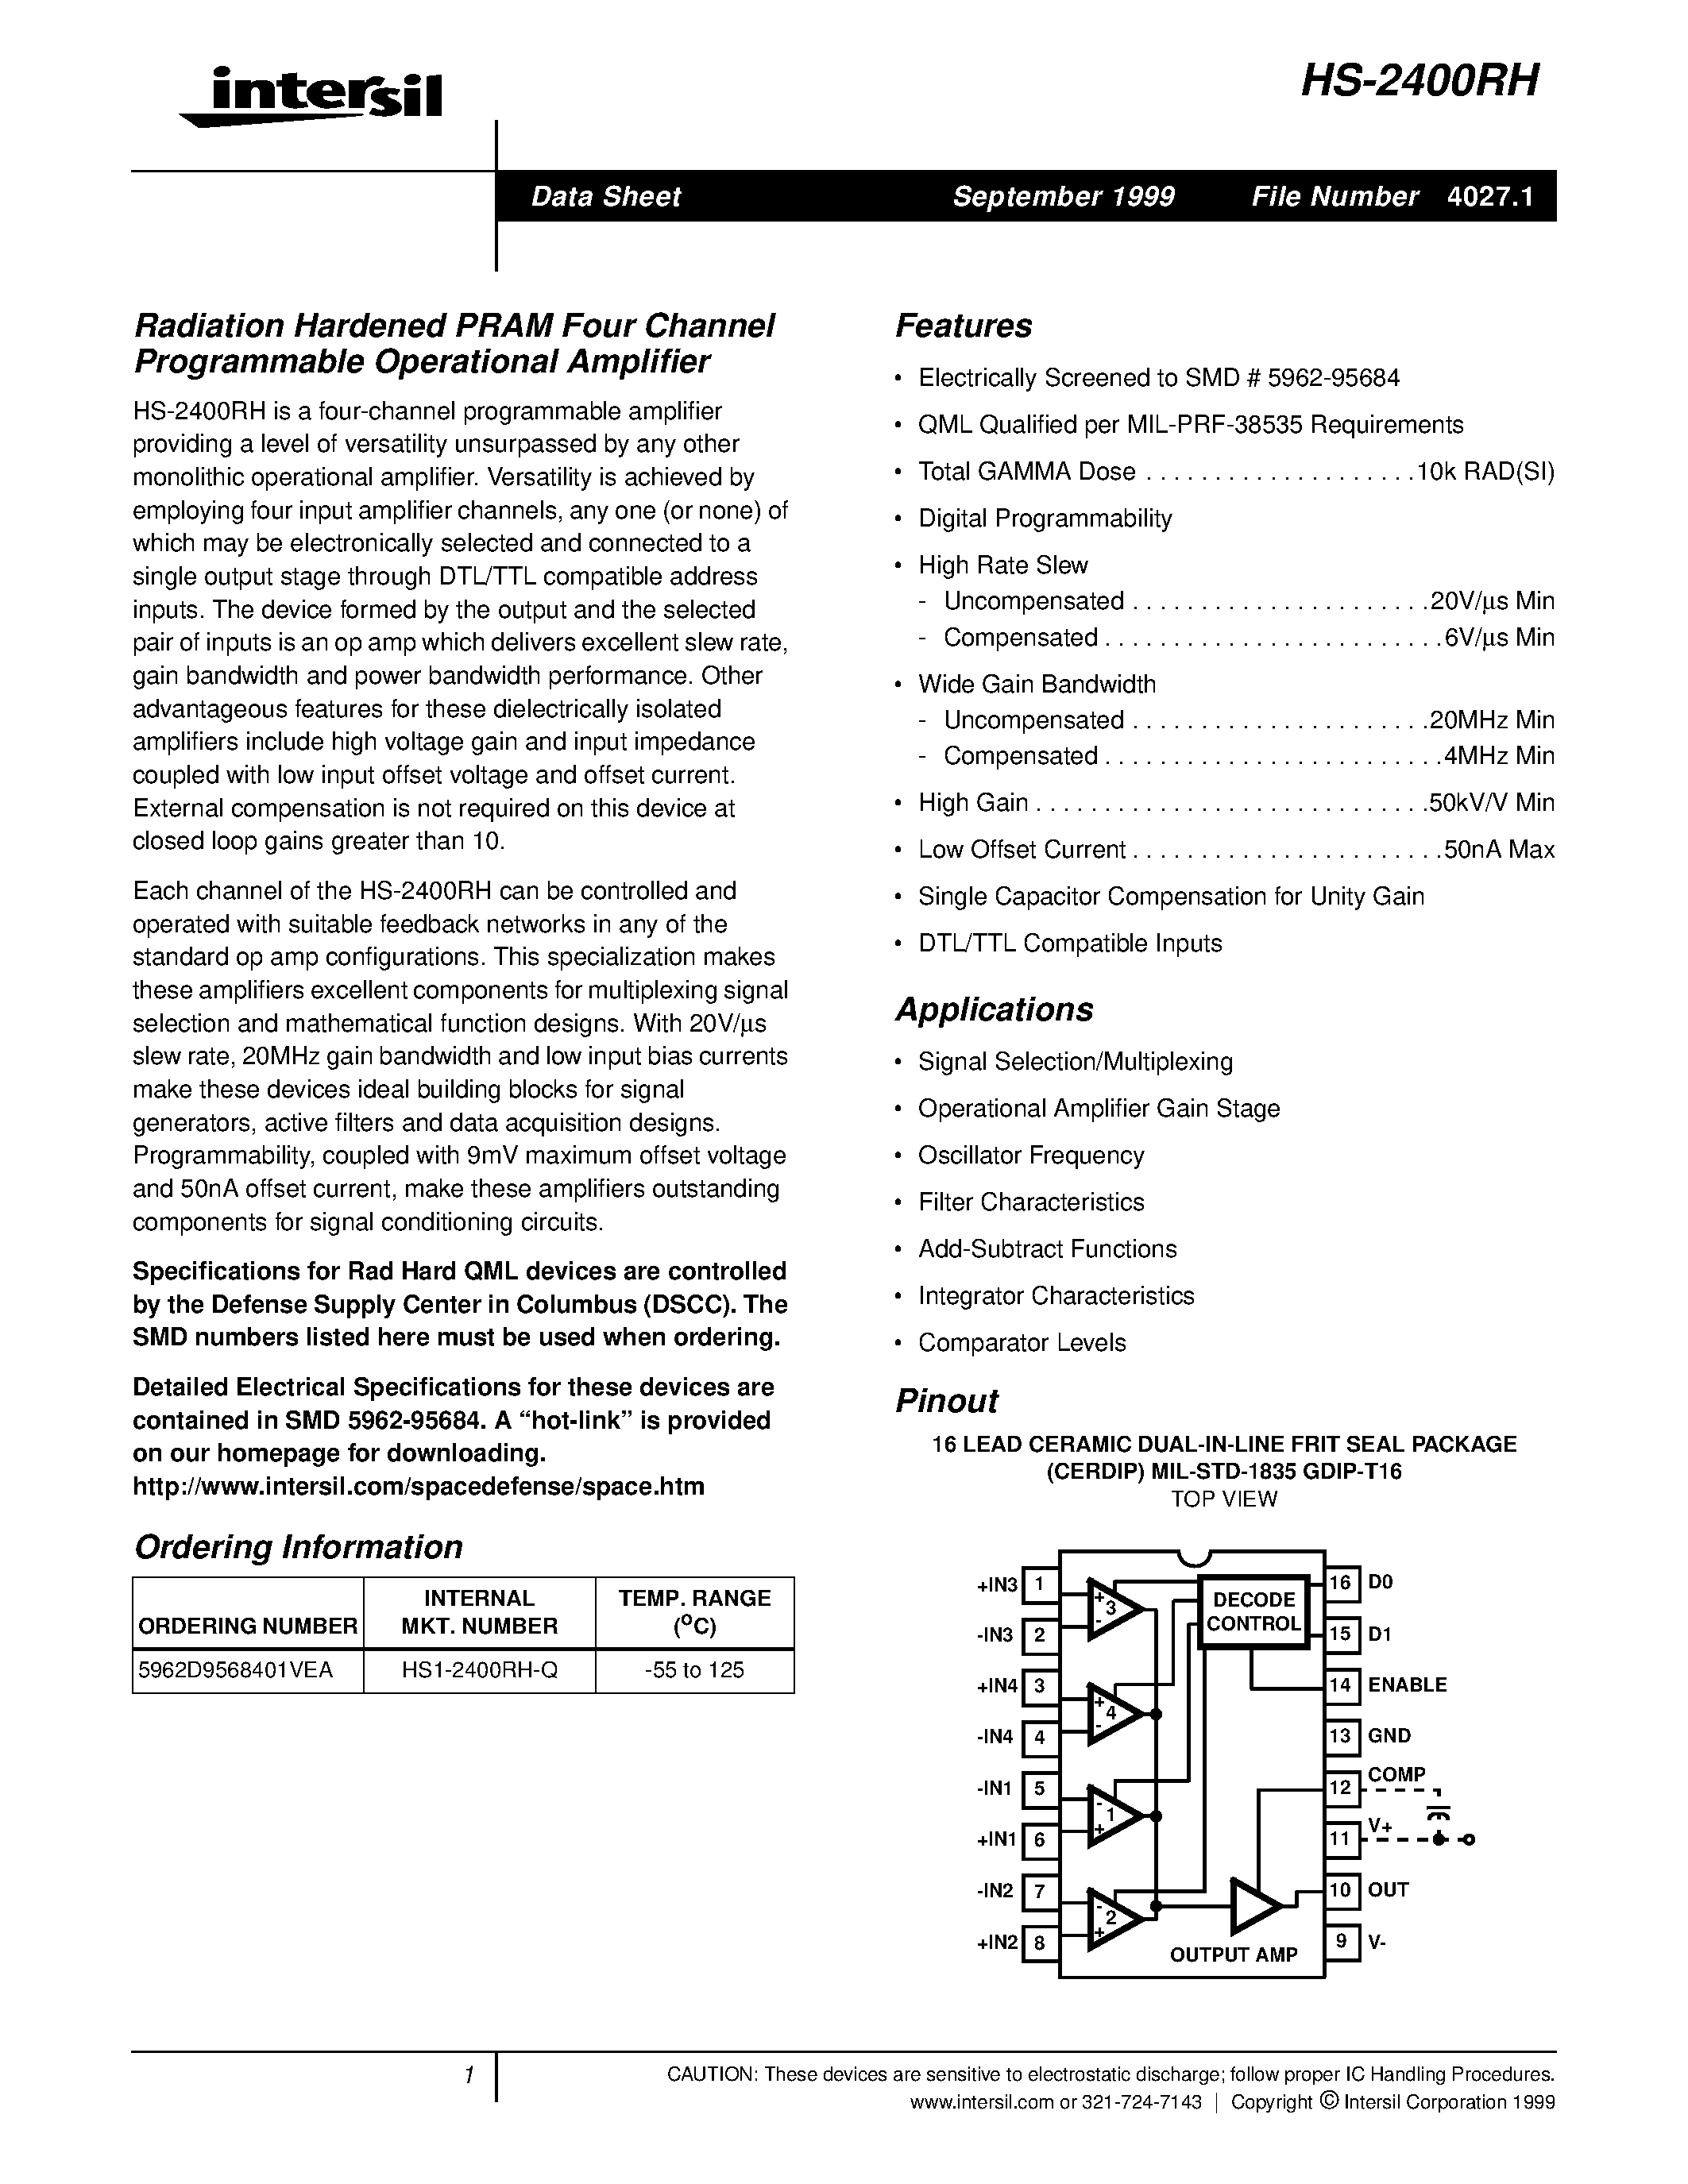 Datasheet HS1-2400RH-Q - Radiation Hardened PRAM Four Channel Programmable Operational Amplifier page 1